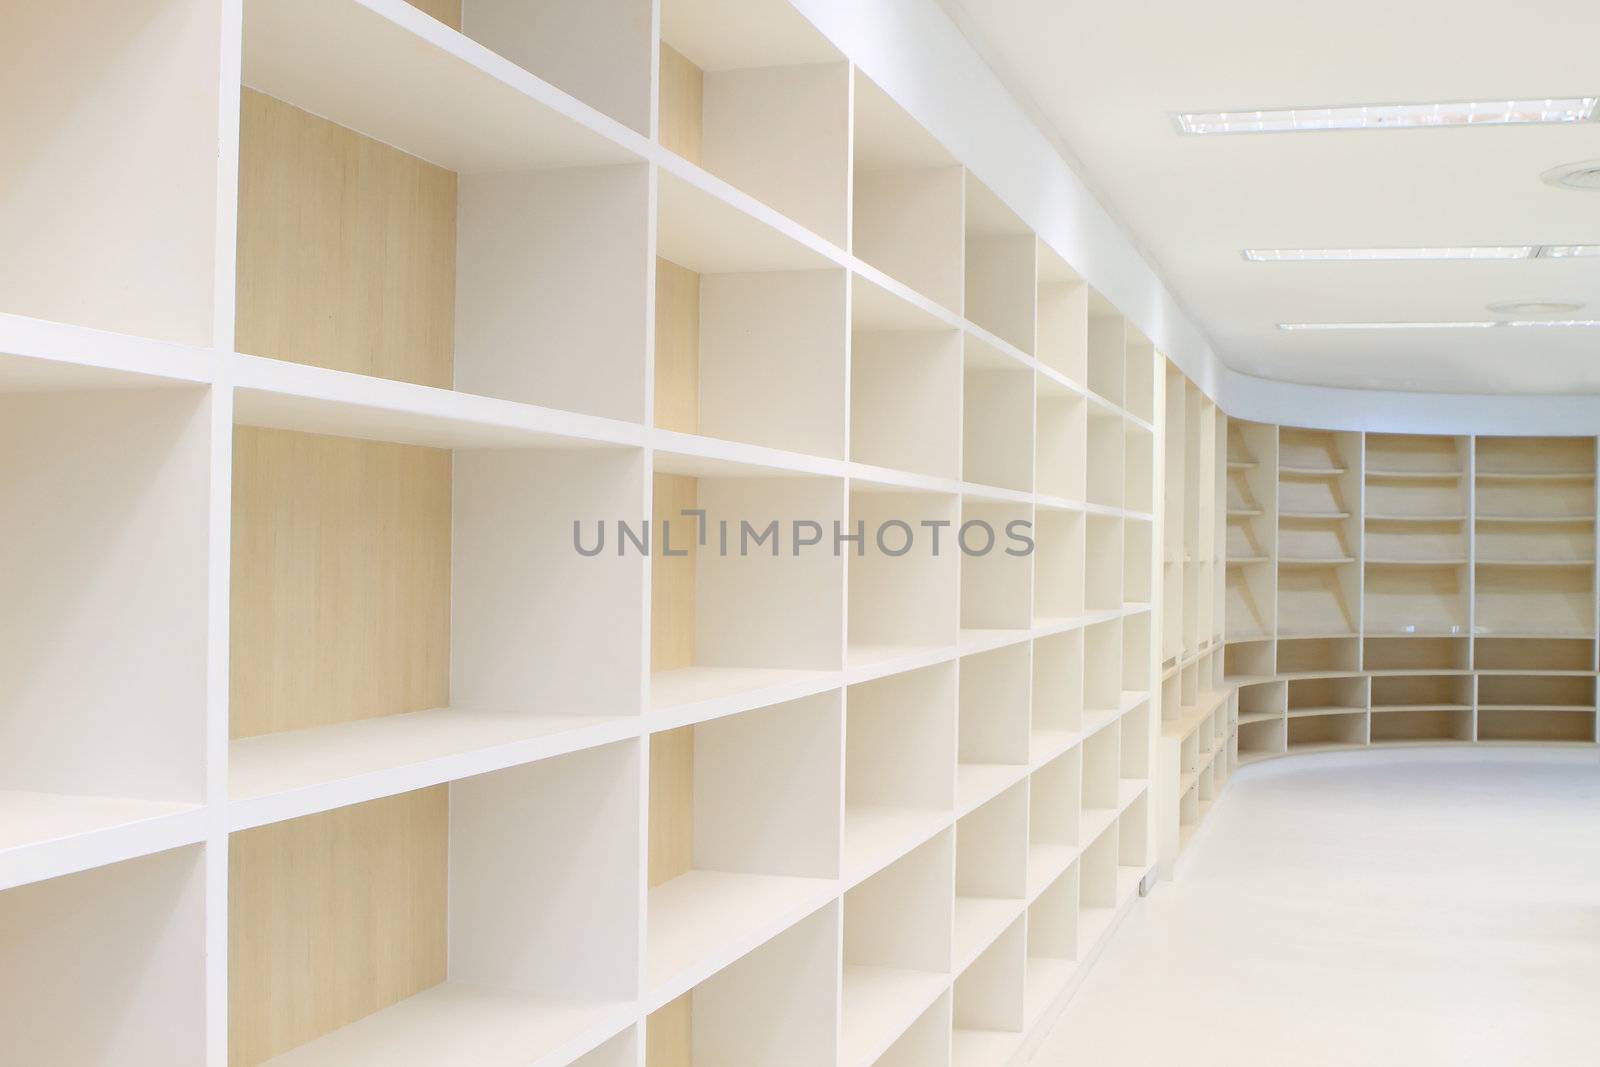 Blank wooden bookshelf